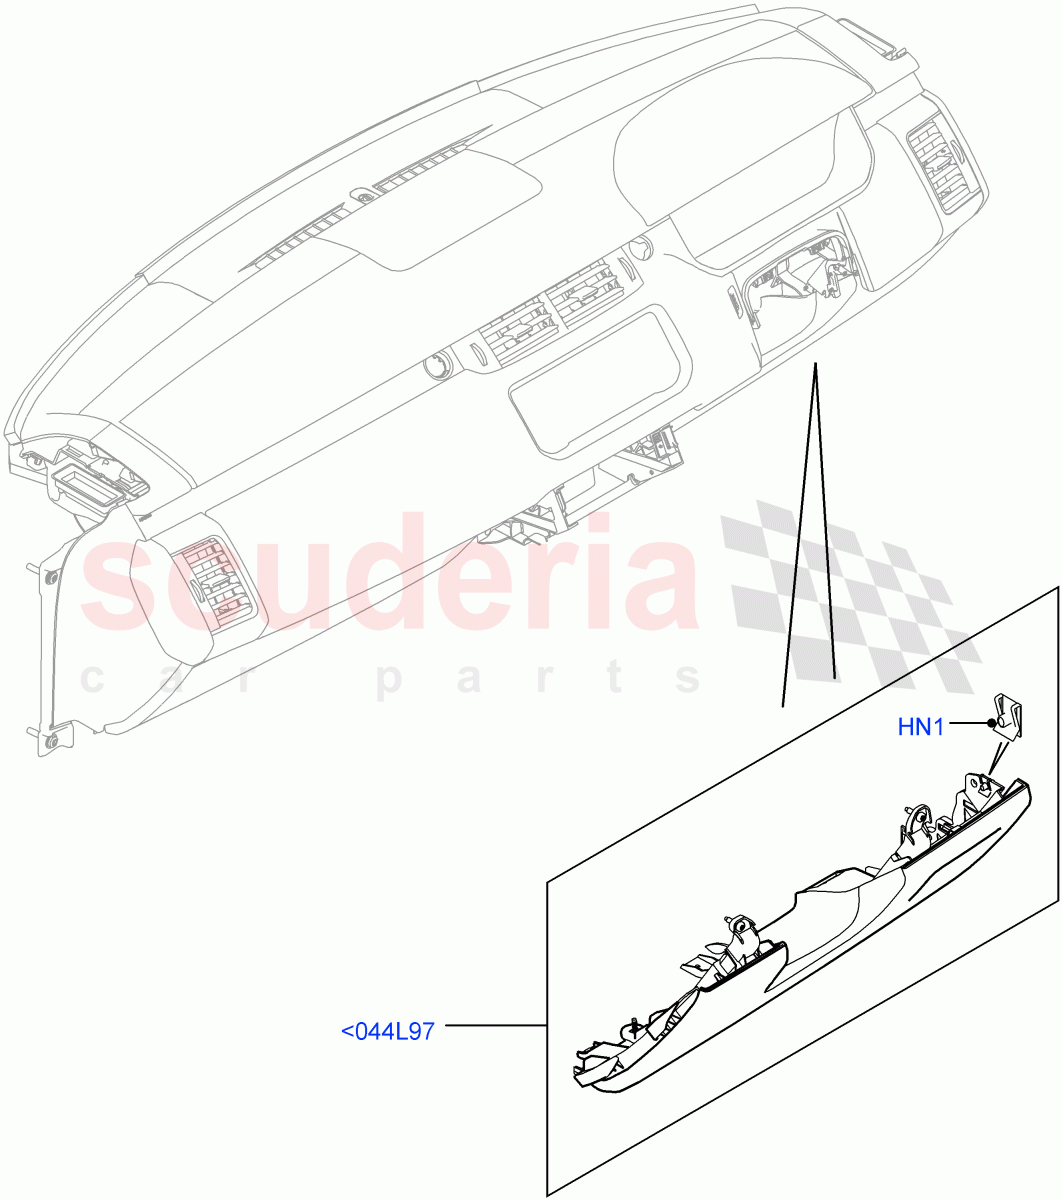 Instrument Panel(External, Lower) of Land Rover Land Rover Range Rover Sport (2014+) [3.0 DOHC GDI SC V6 Petrol]